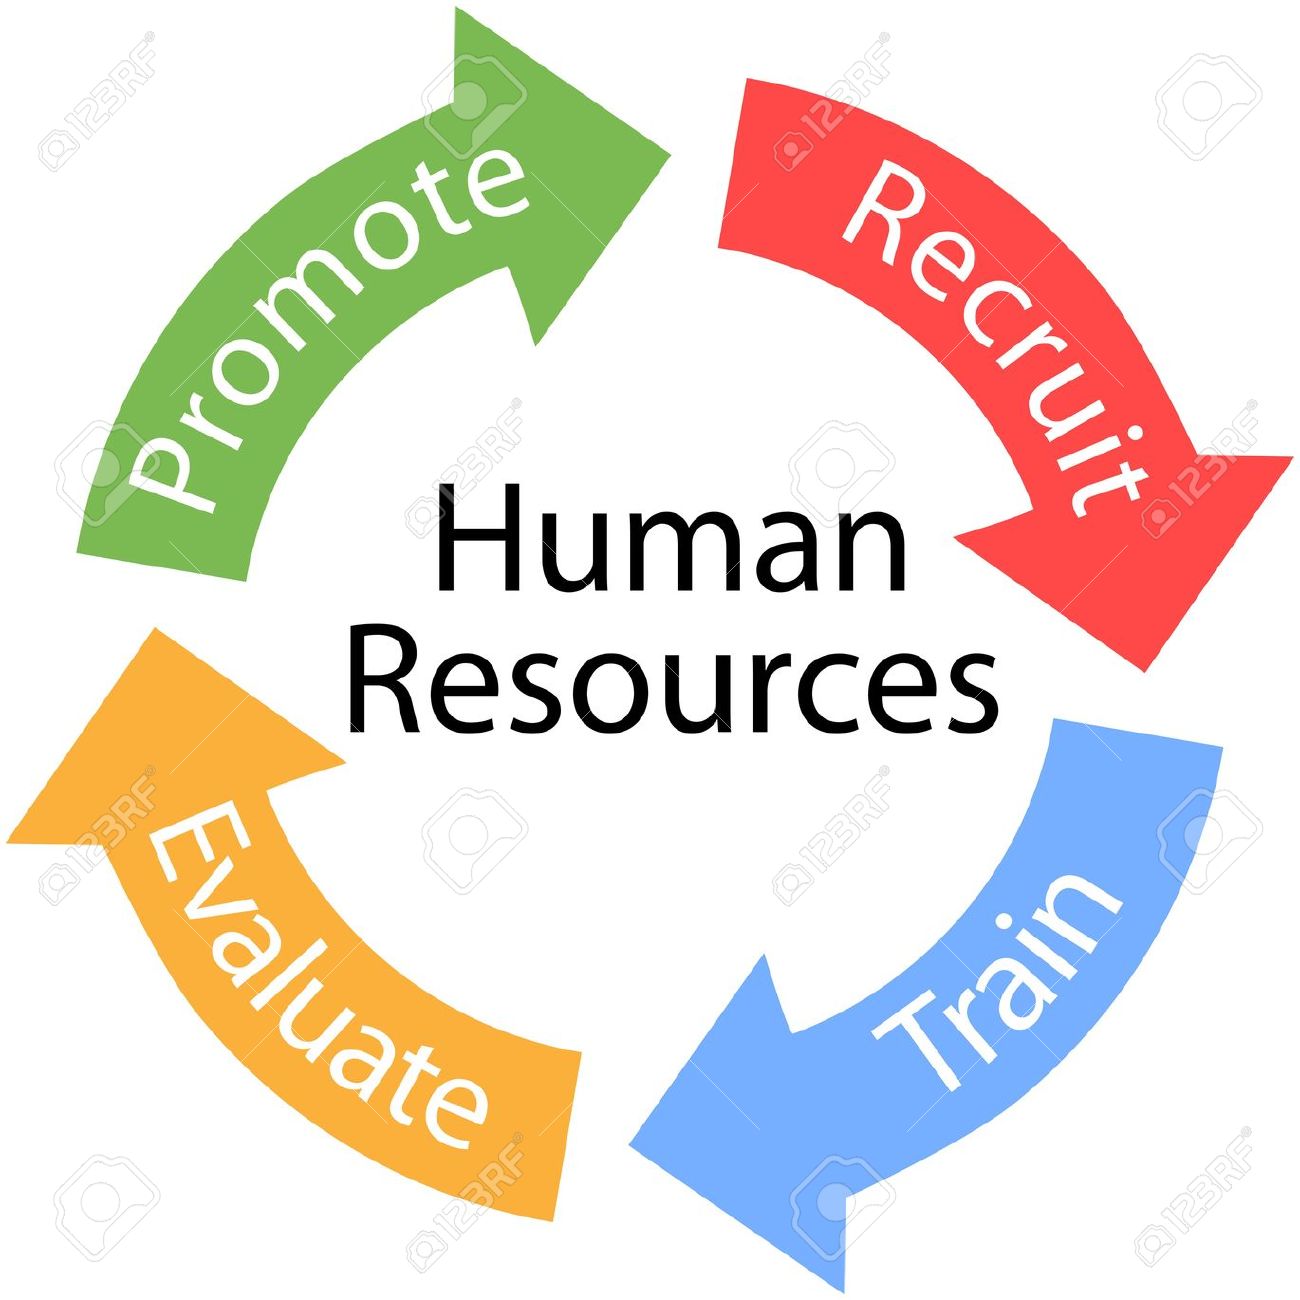 human resources clip art - Human Resources Clipart